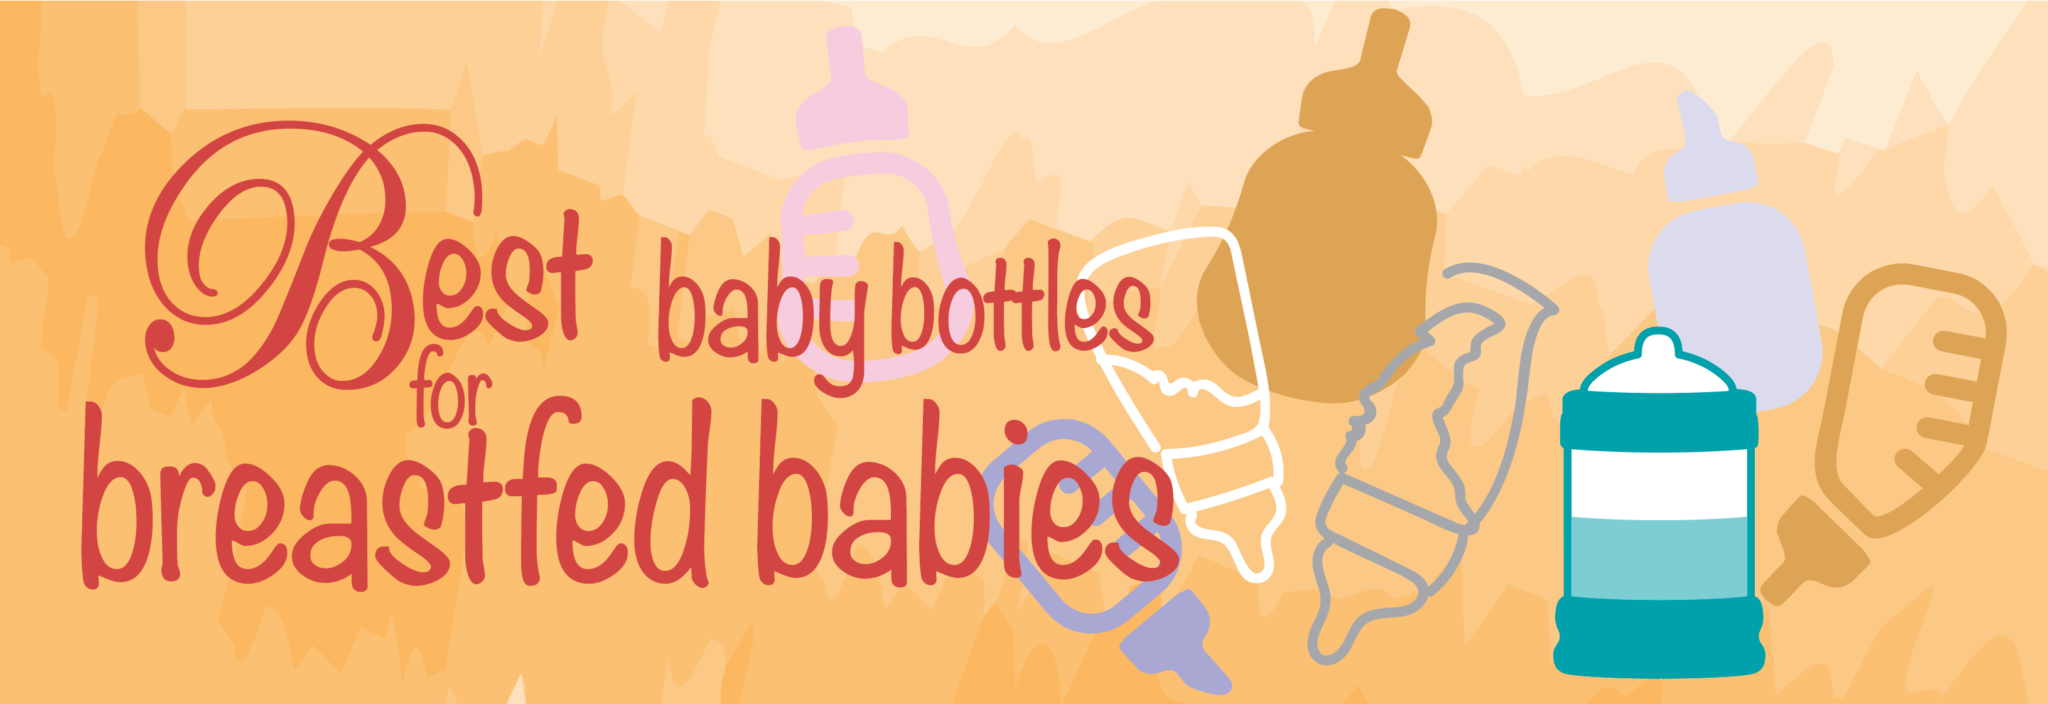 Best baby bottles for breastfed babies